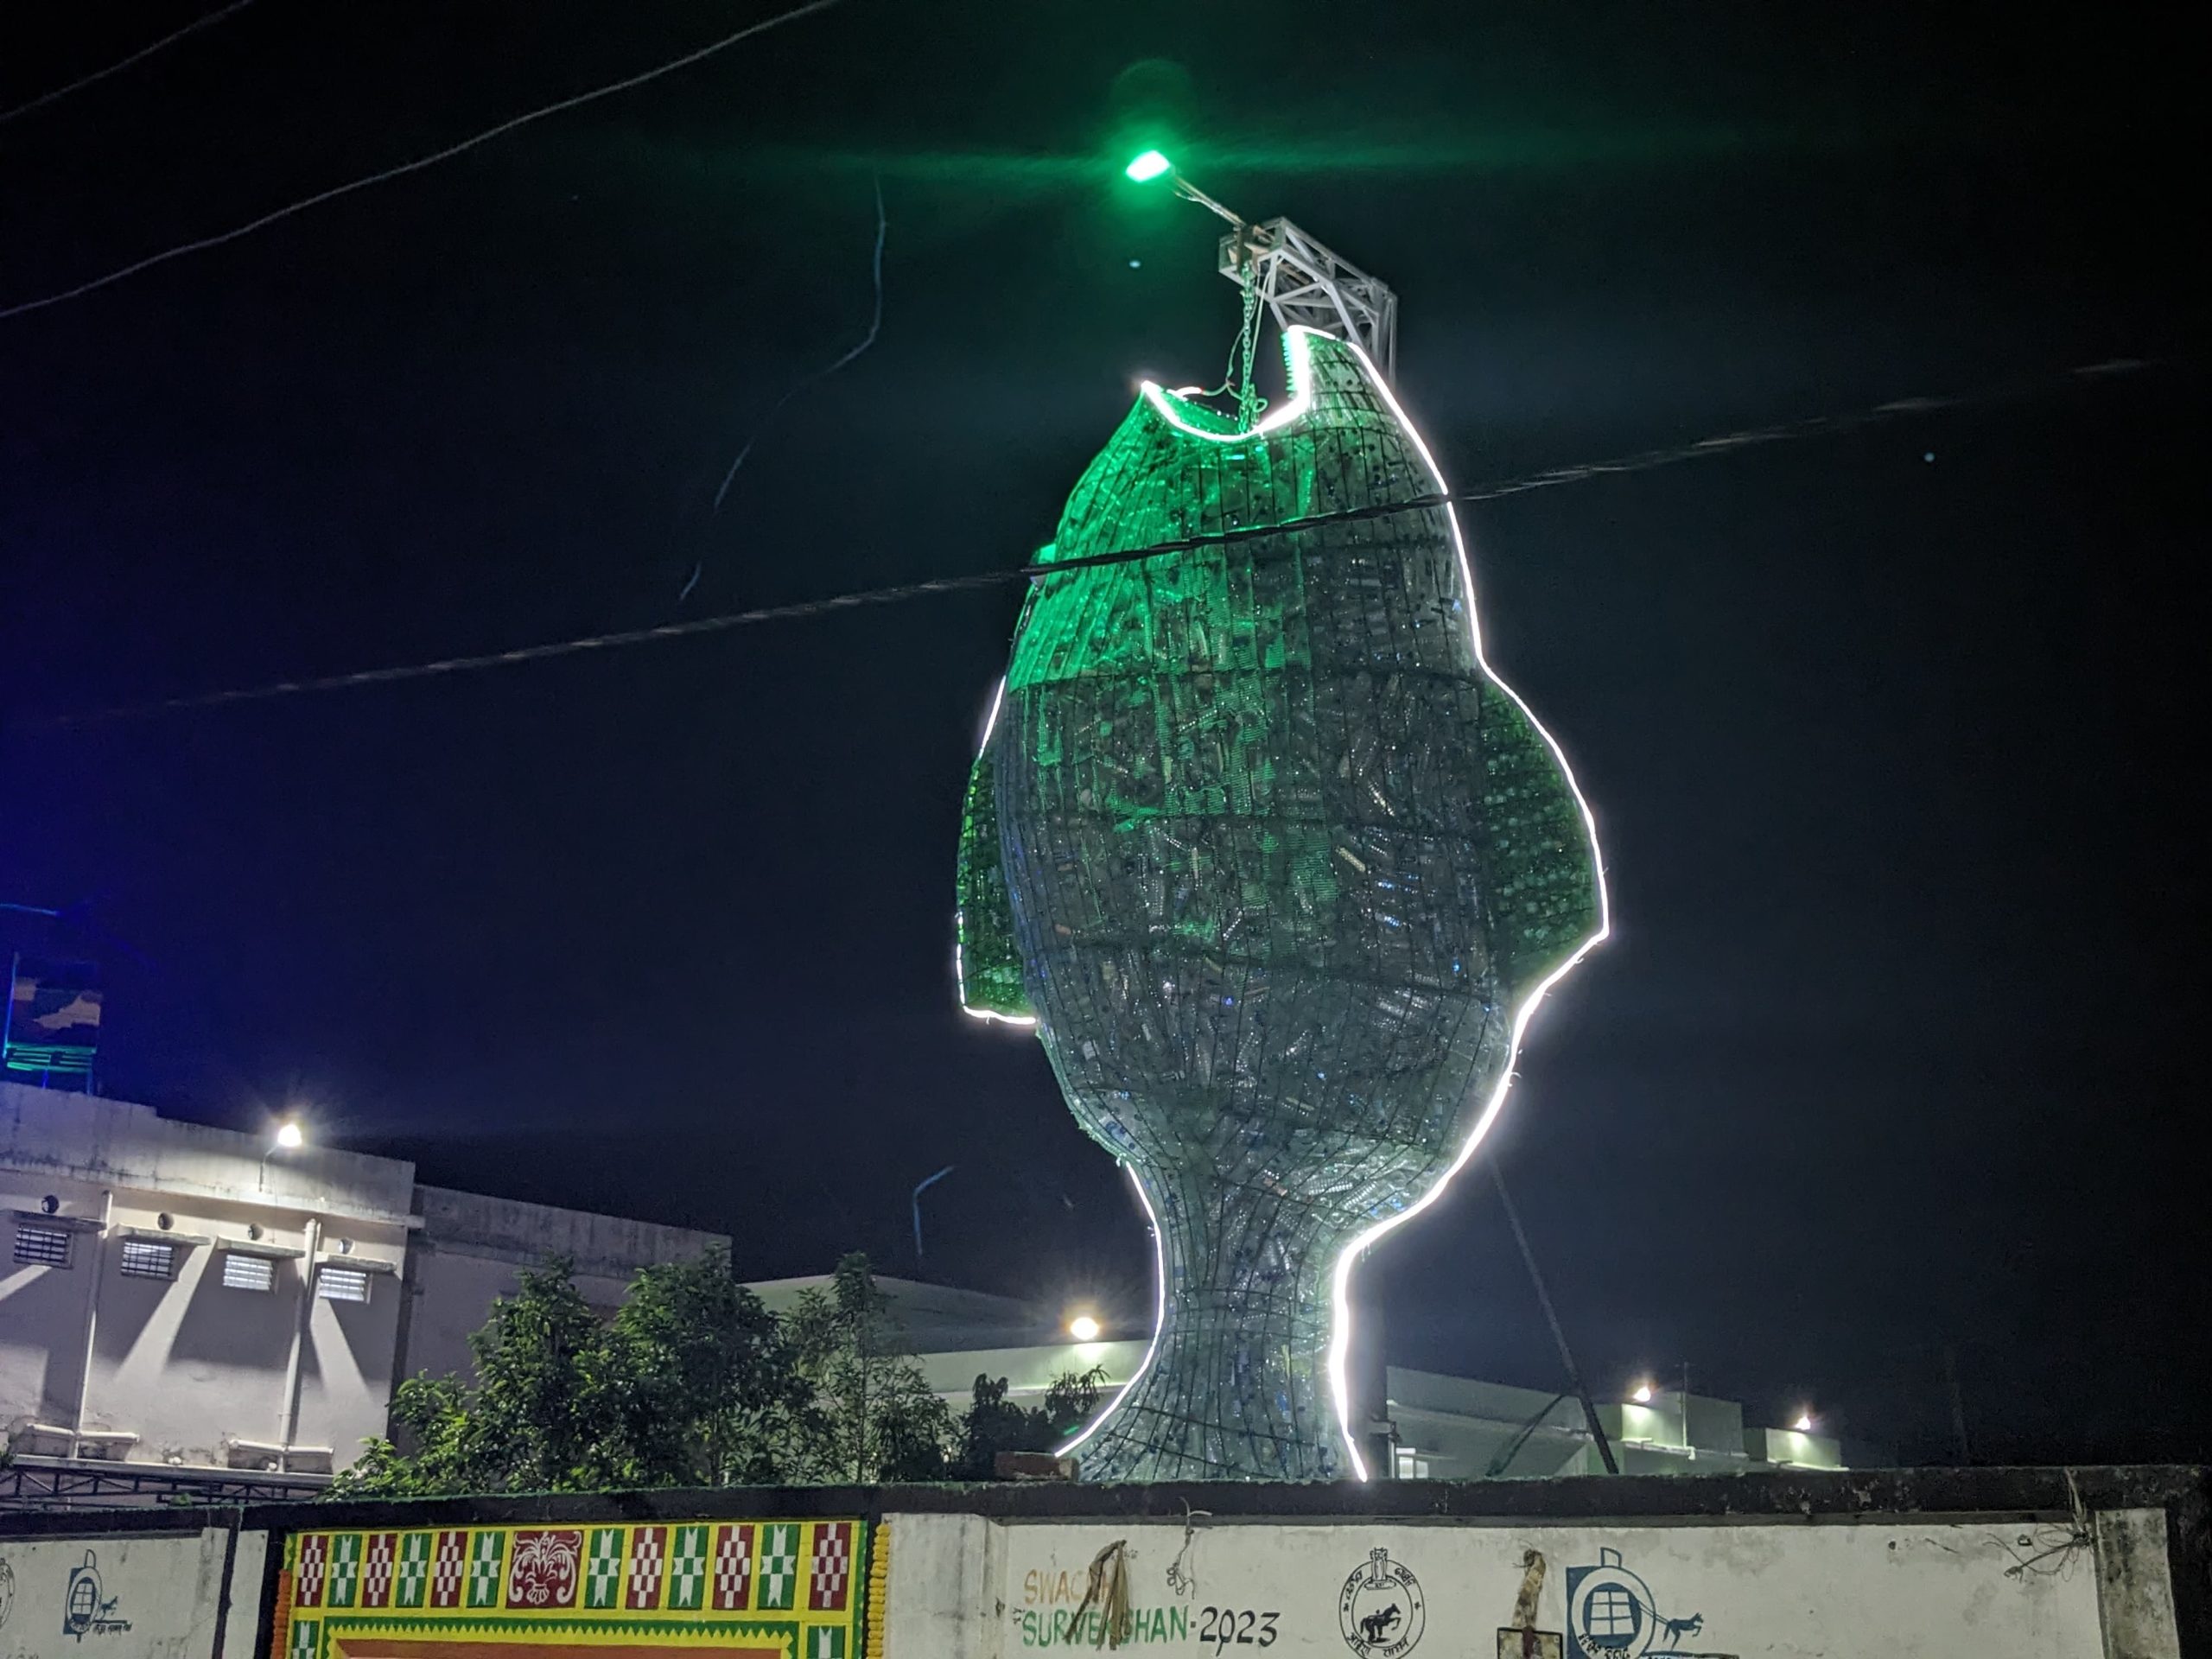 ITI-Berhampur in Odisha creates 30-ft fish sculpture from 20,000 plastic bottles